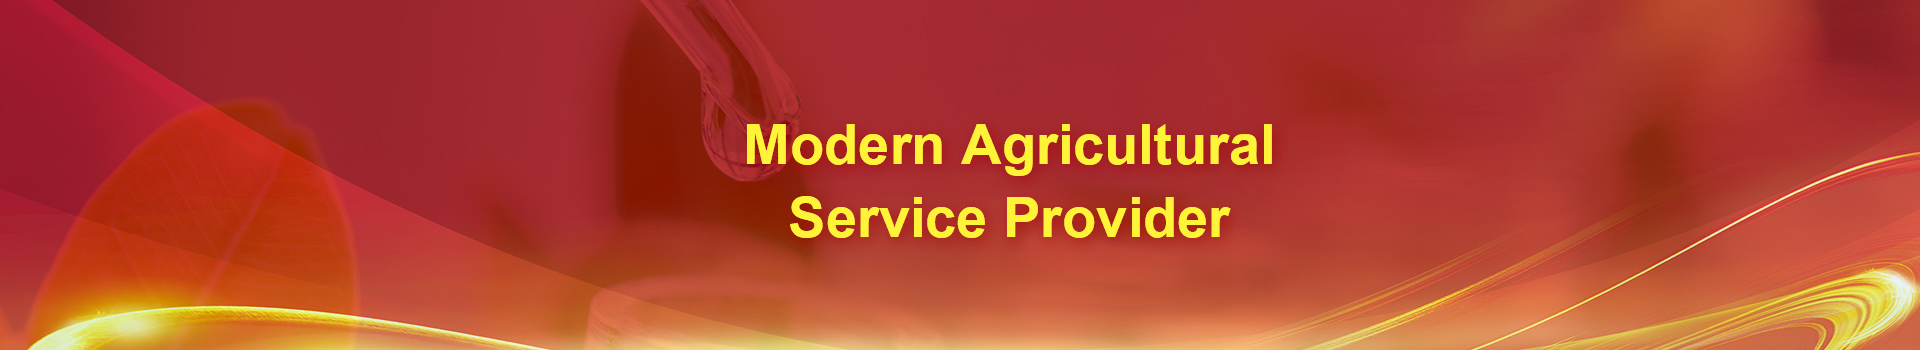 Modern Agricultural Service Provider